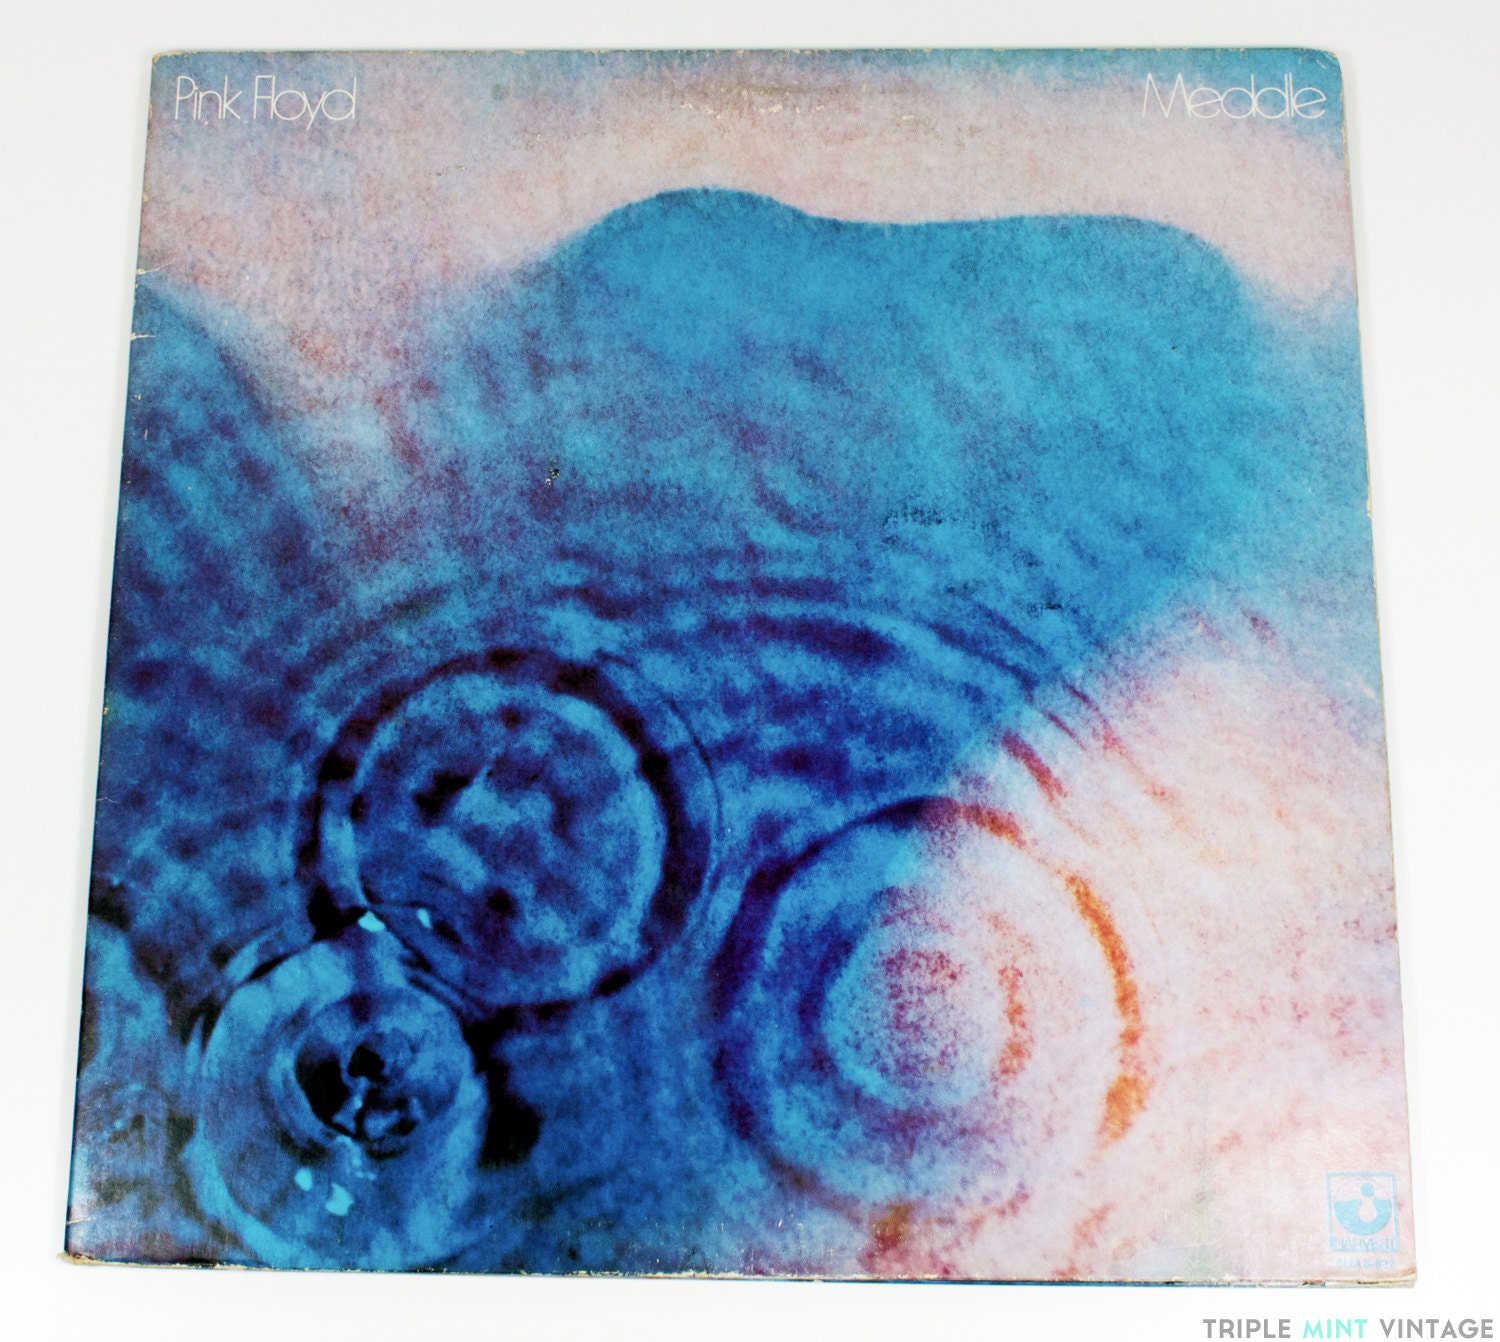 Pink Floyd - Meddle - Vinyl LP (1971)